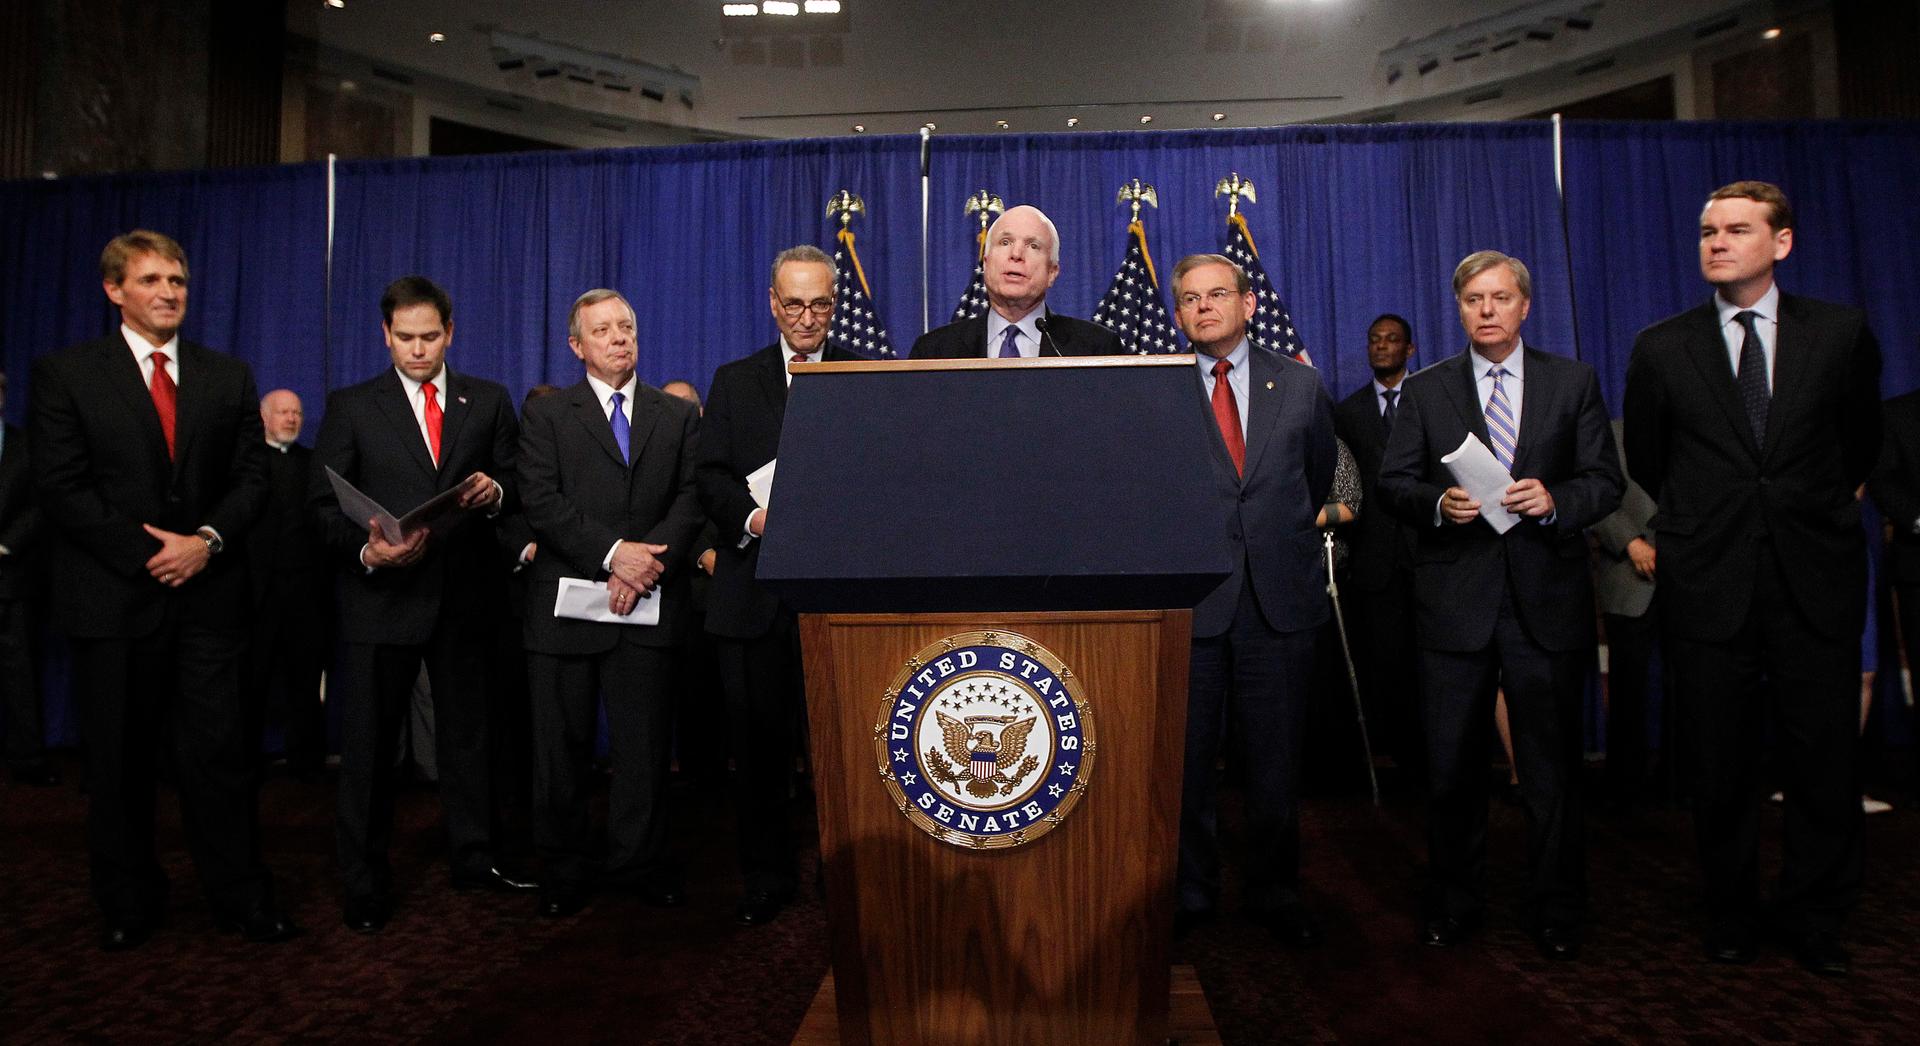 Eight men behind podium with microphones